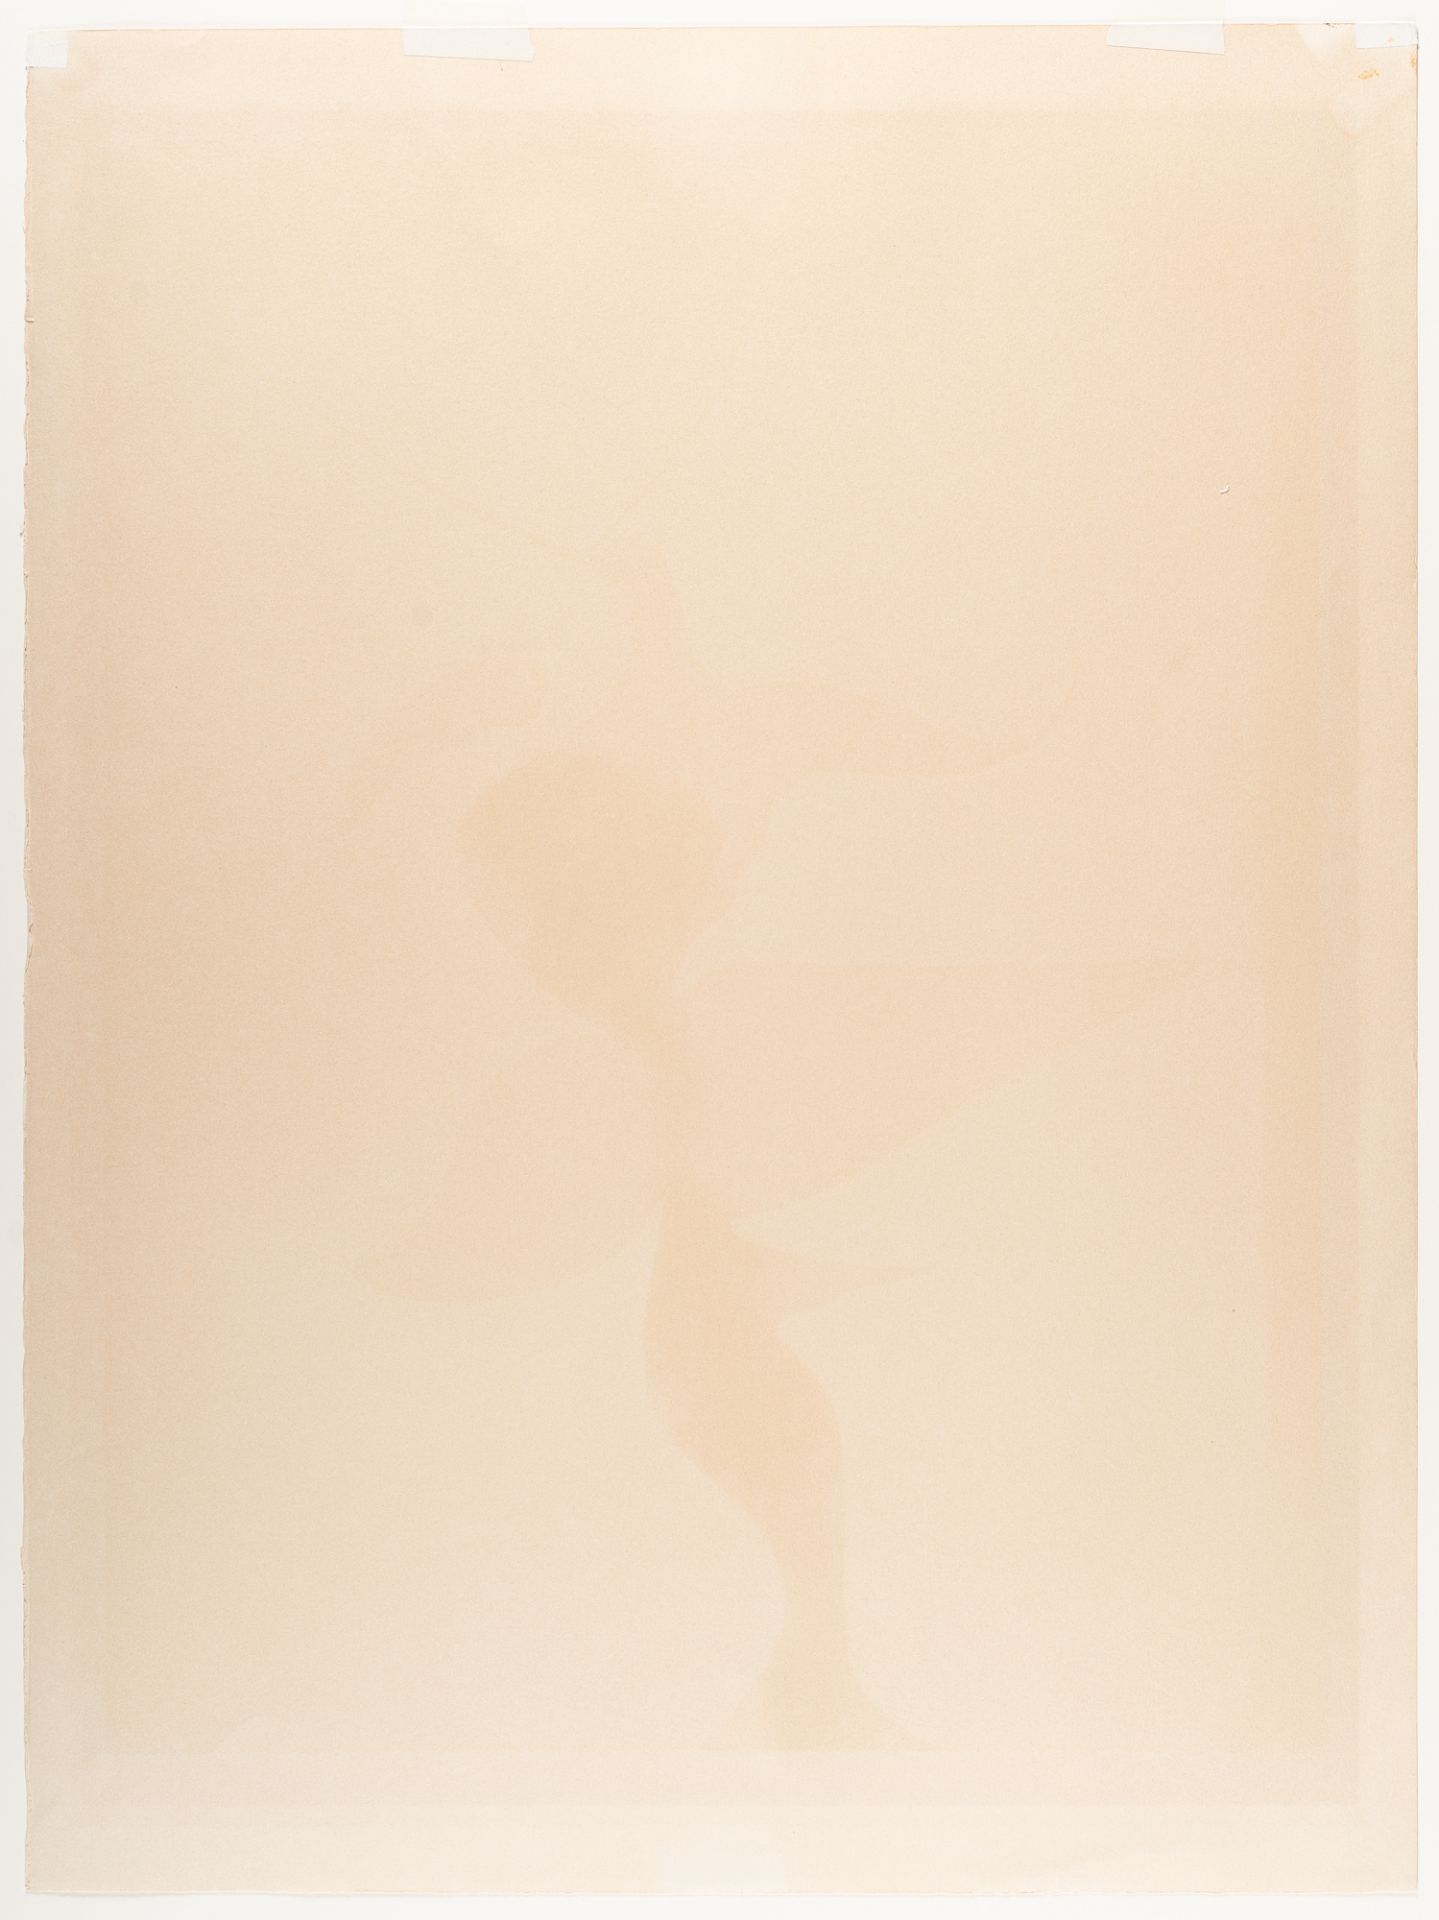 Man Ray (Emmanuel Radnitzky) (1890 Philadelphia - Paris 1976) – Images a Deux Faces - Image 2 of 2